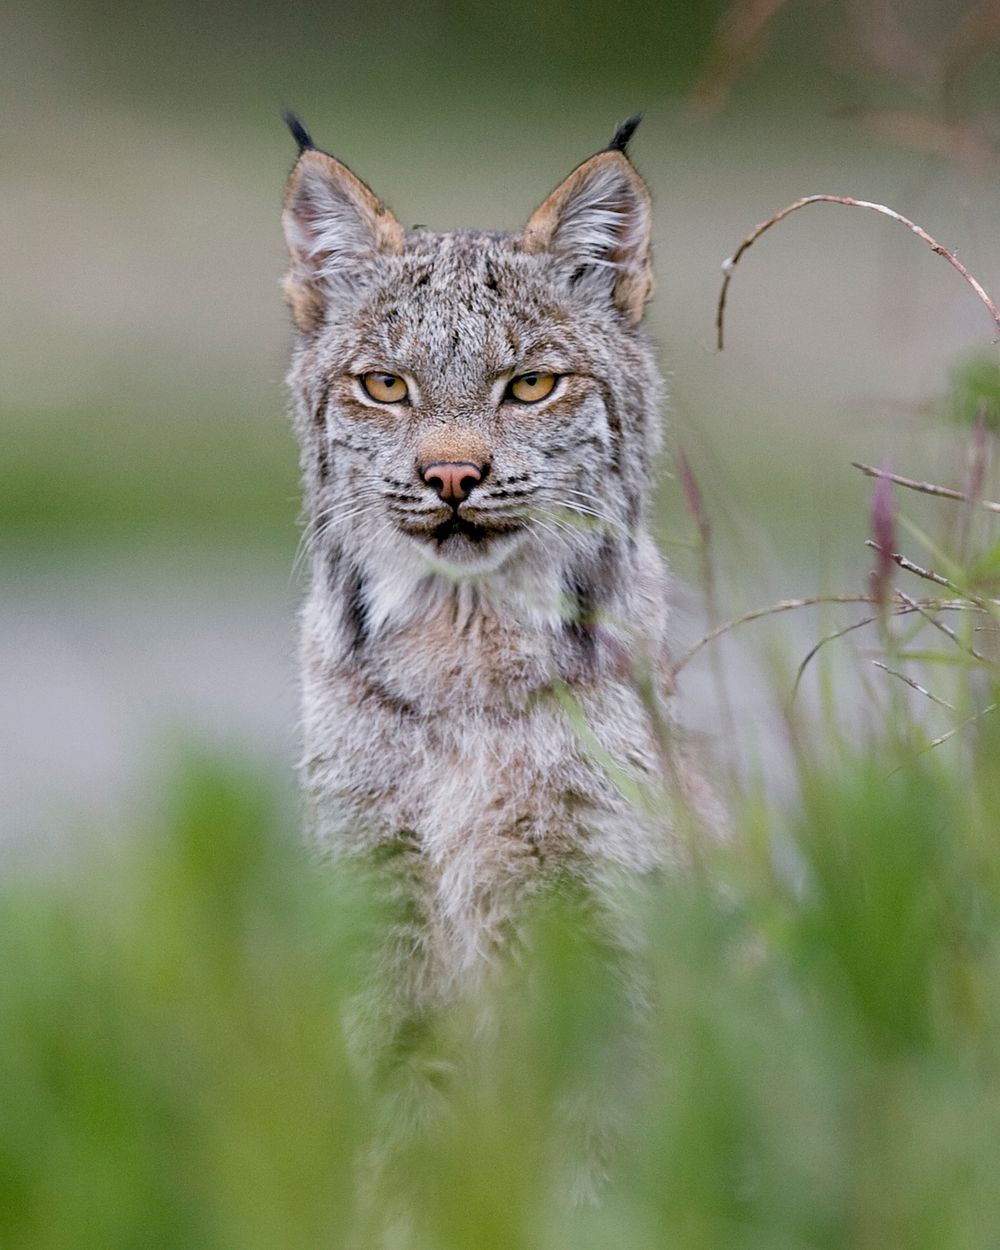 Lynx. Original public domain image from Flickr